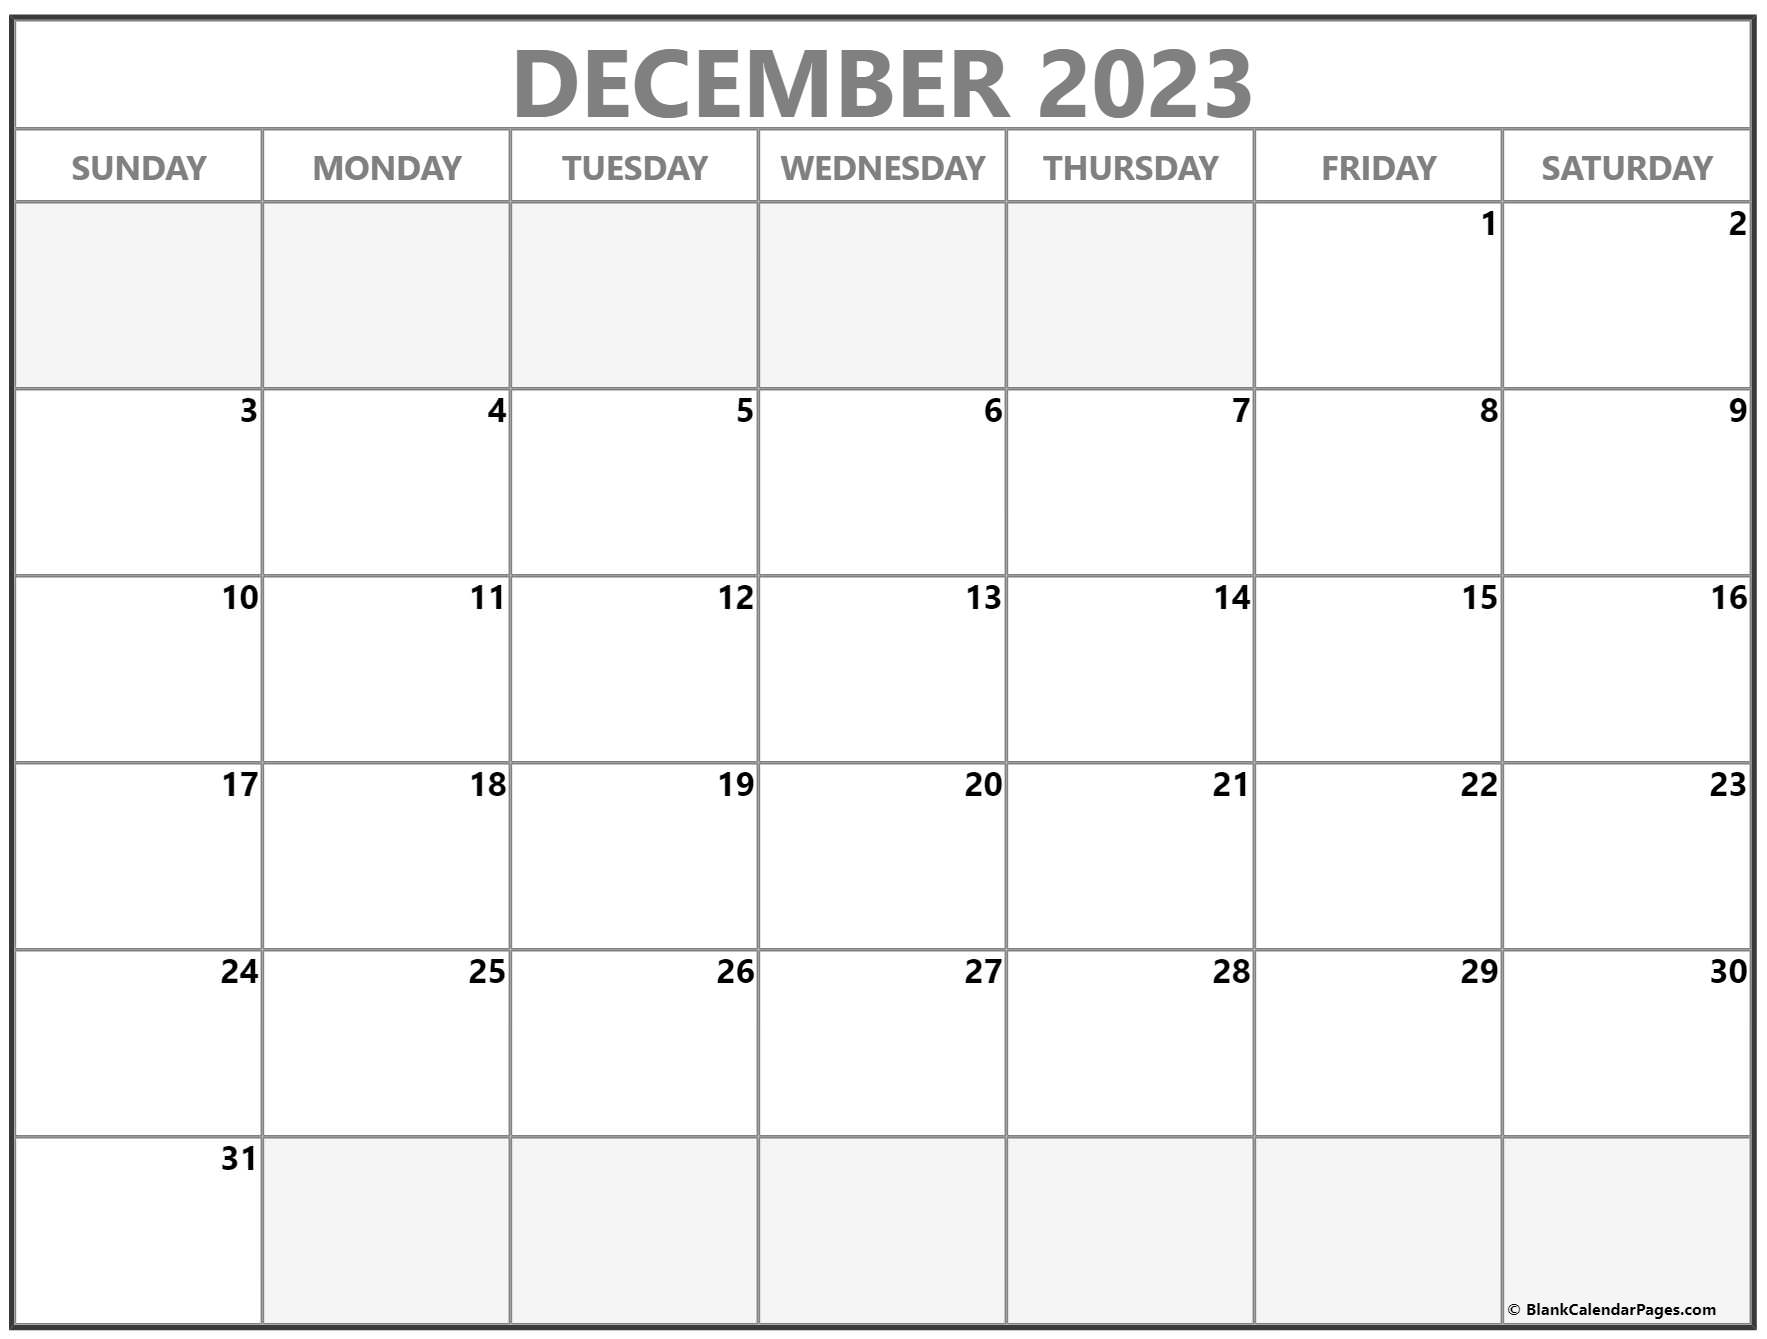 december 2023 calendar free printable calendar - december 2023 calendar ...